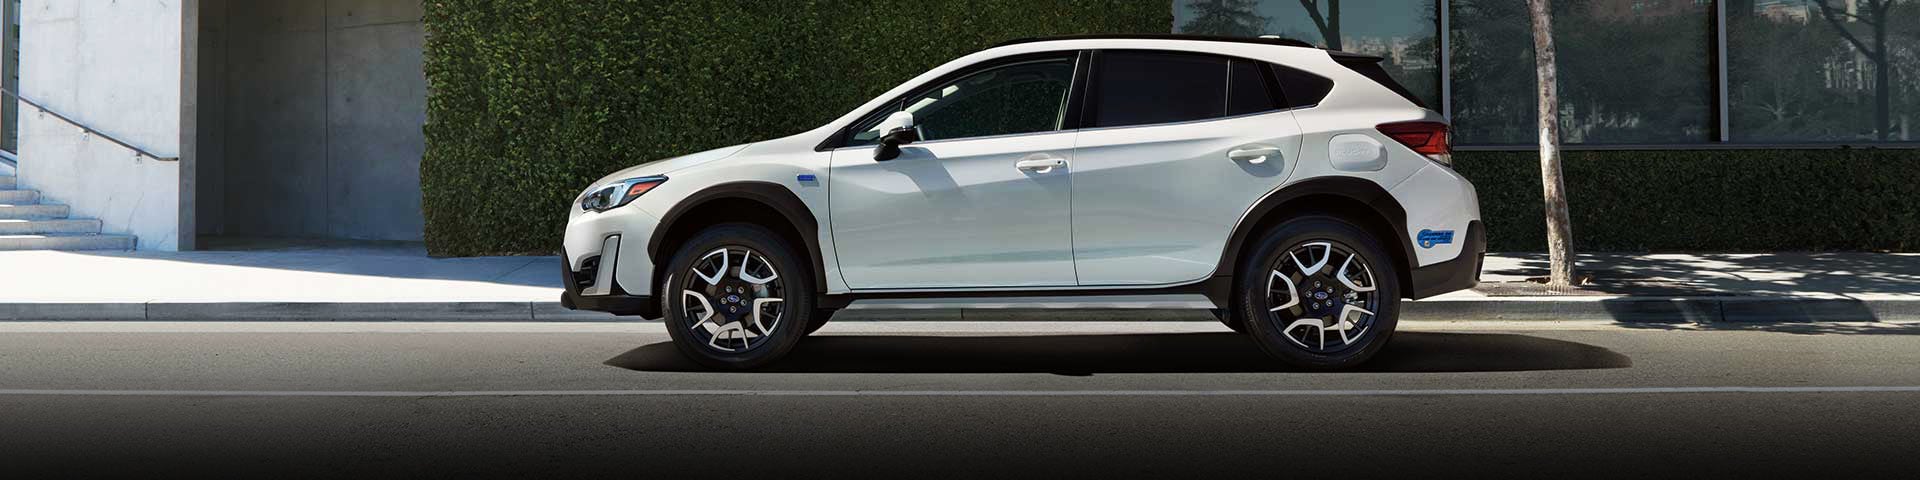 The side profile of a white Subaru Crosstrek Hybrid | Subaru of Ann Arbor in Ann Arbor MI